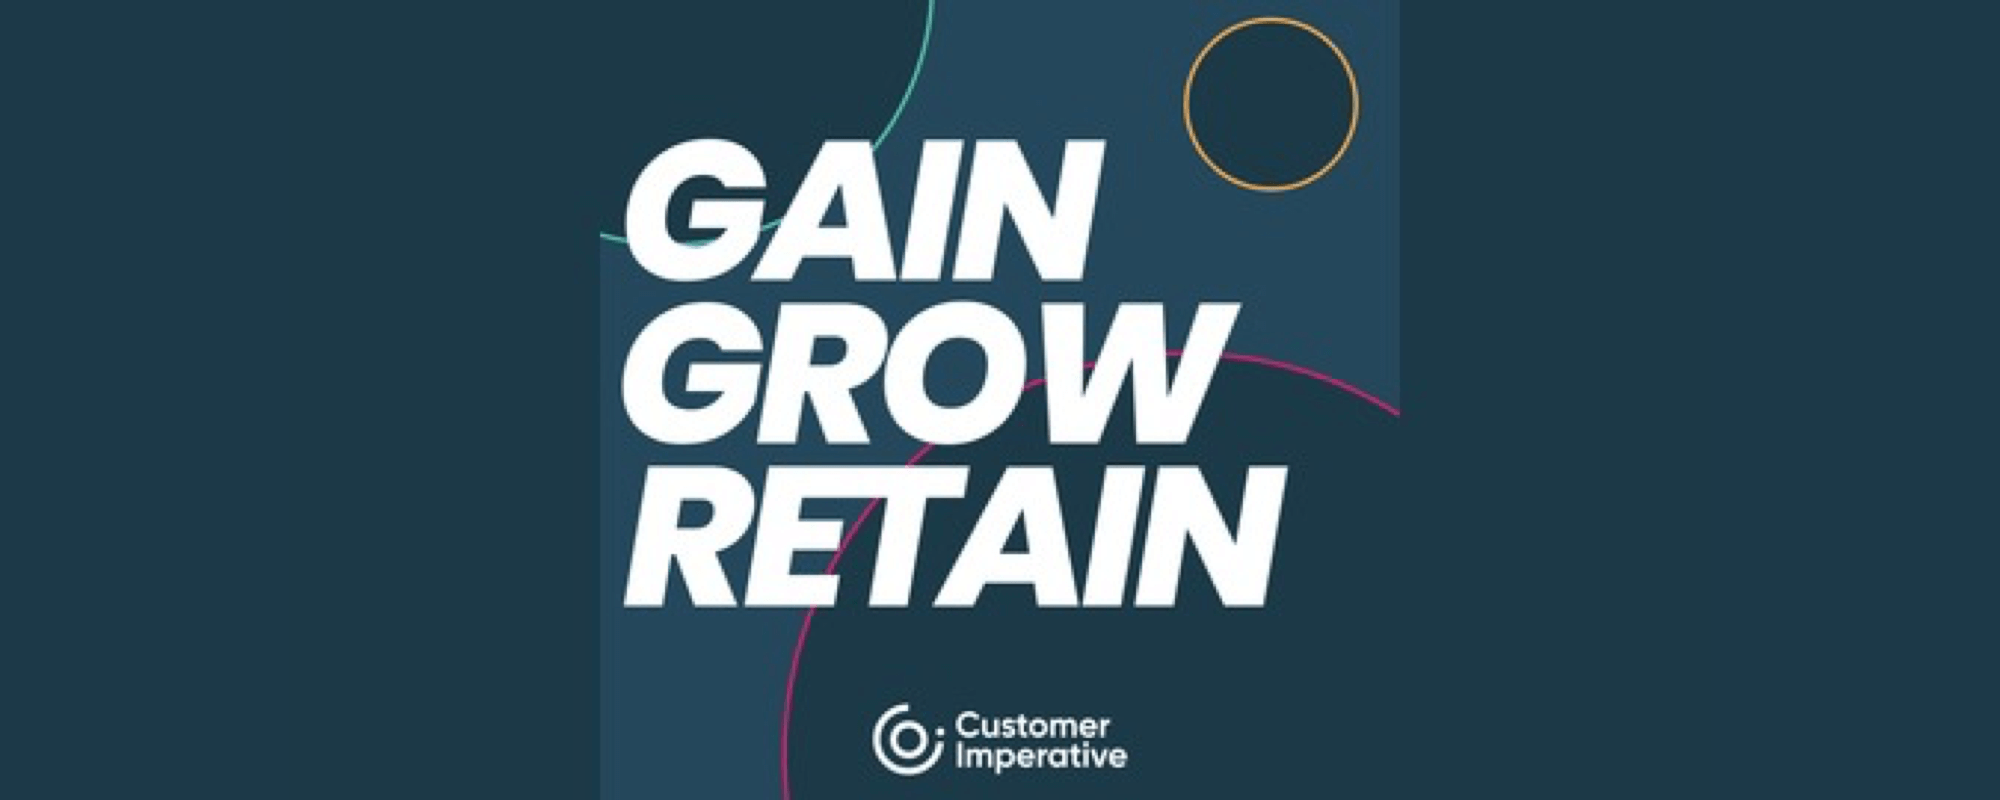 gain-grow-retain-podcast